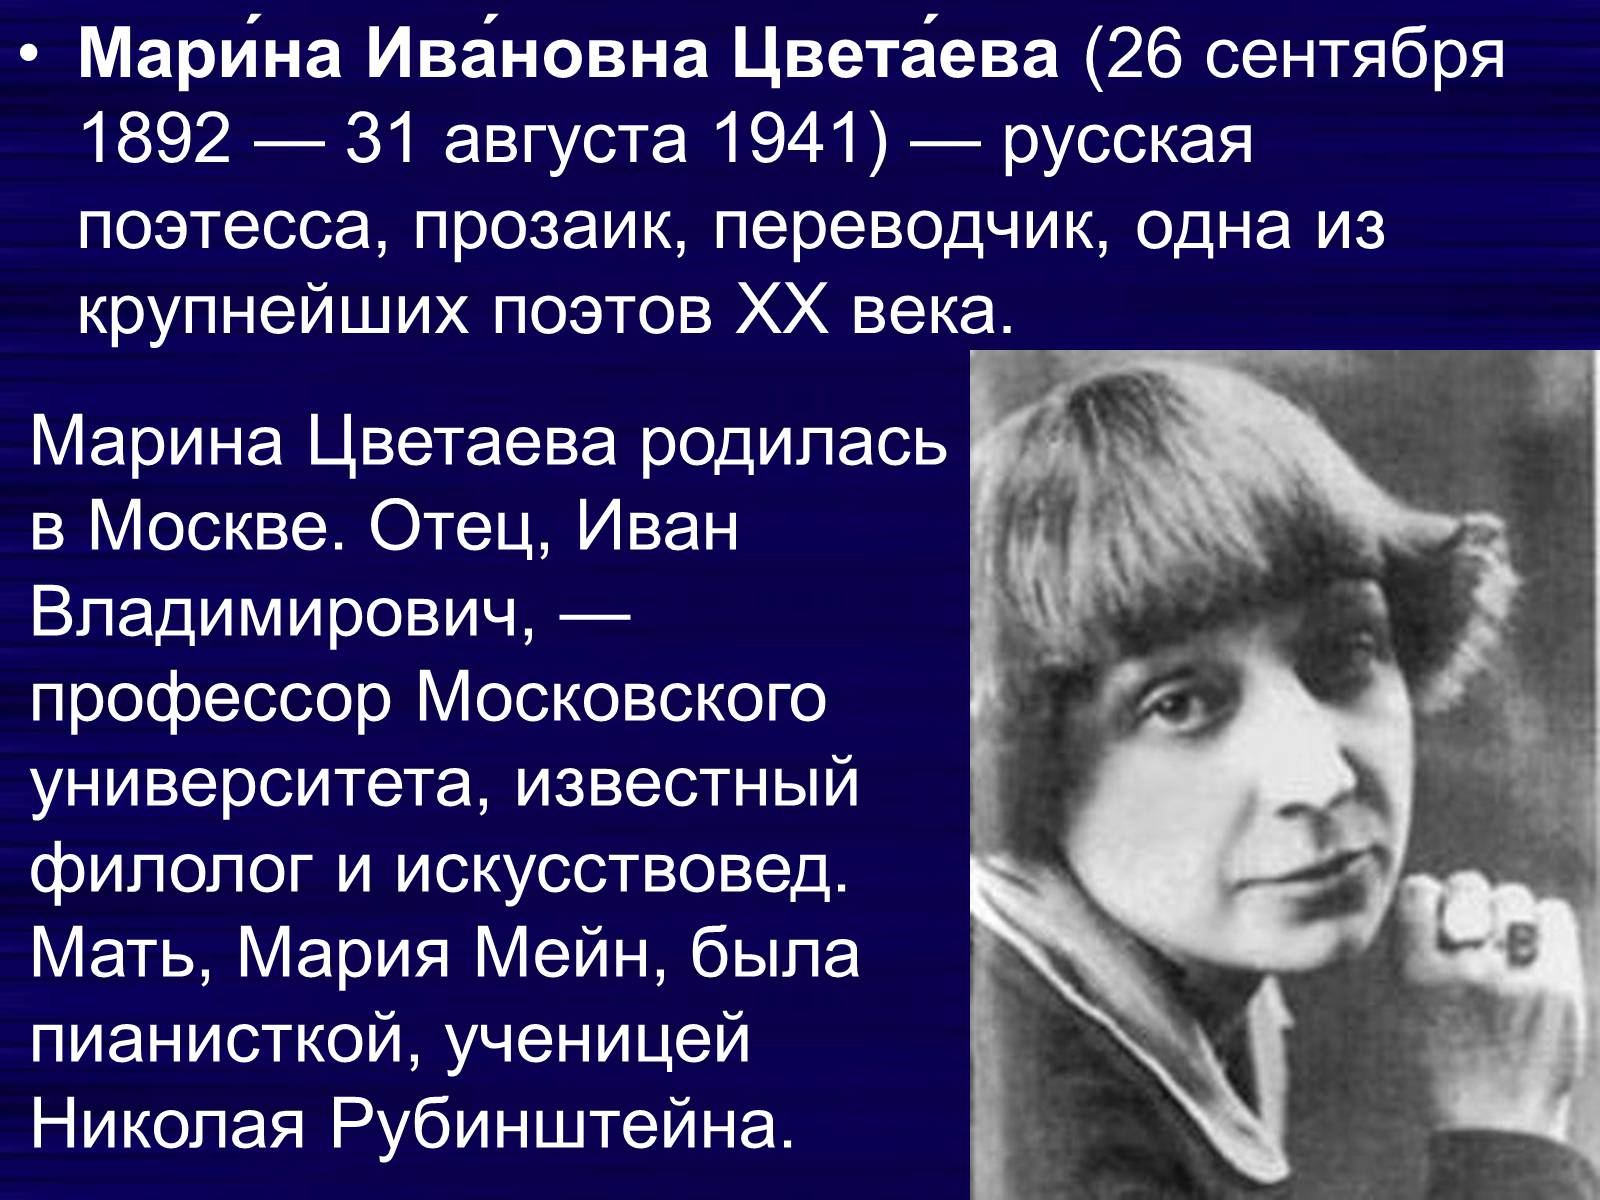 Мари́на Ива́новна Цвета́ева 1892 -1941